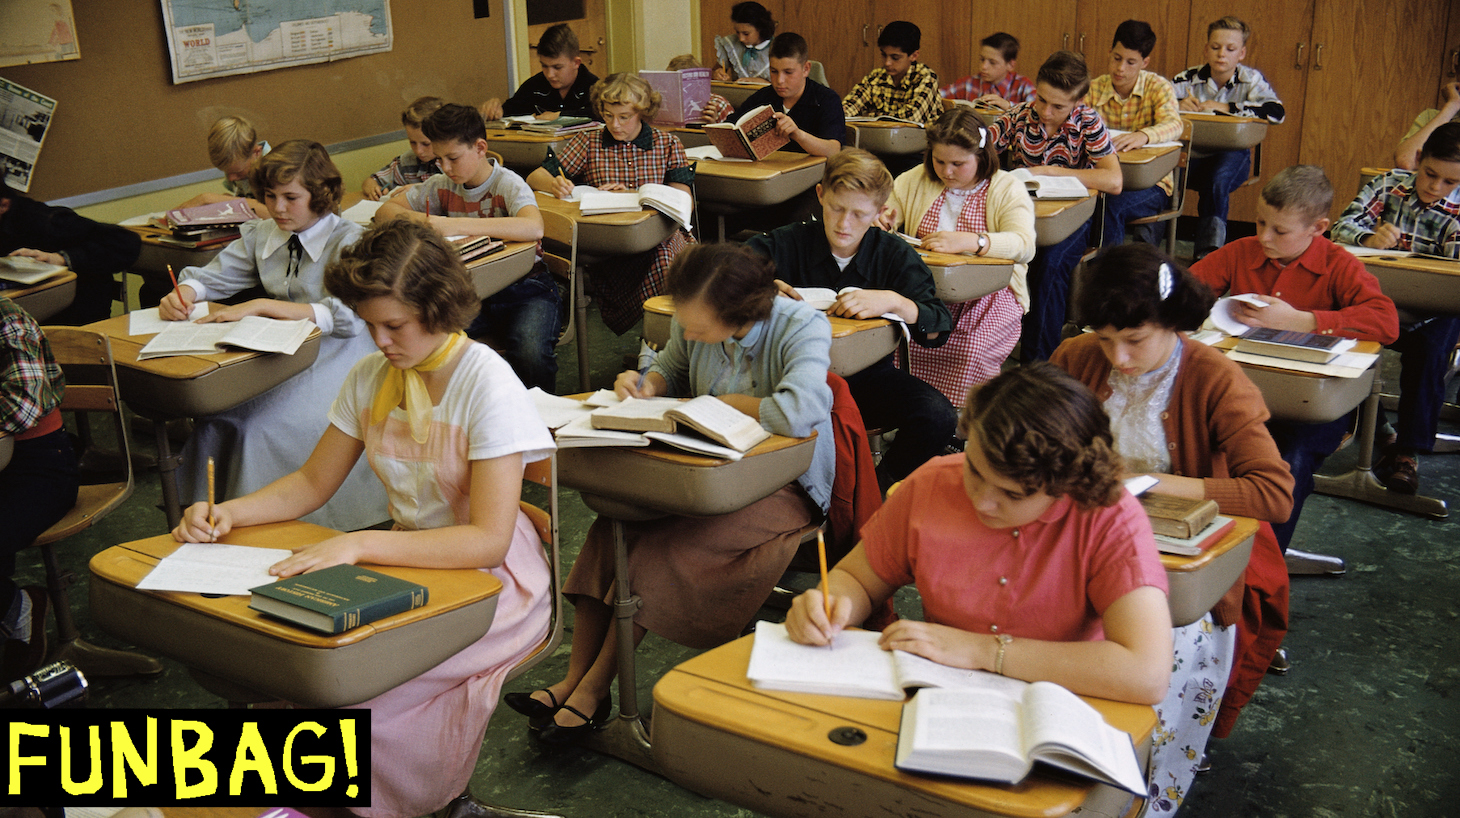 High School Students Writing at Desks (Photo by �� William Gottlieb/CORBIS/Corbis via Getty Images)